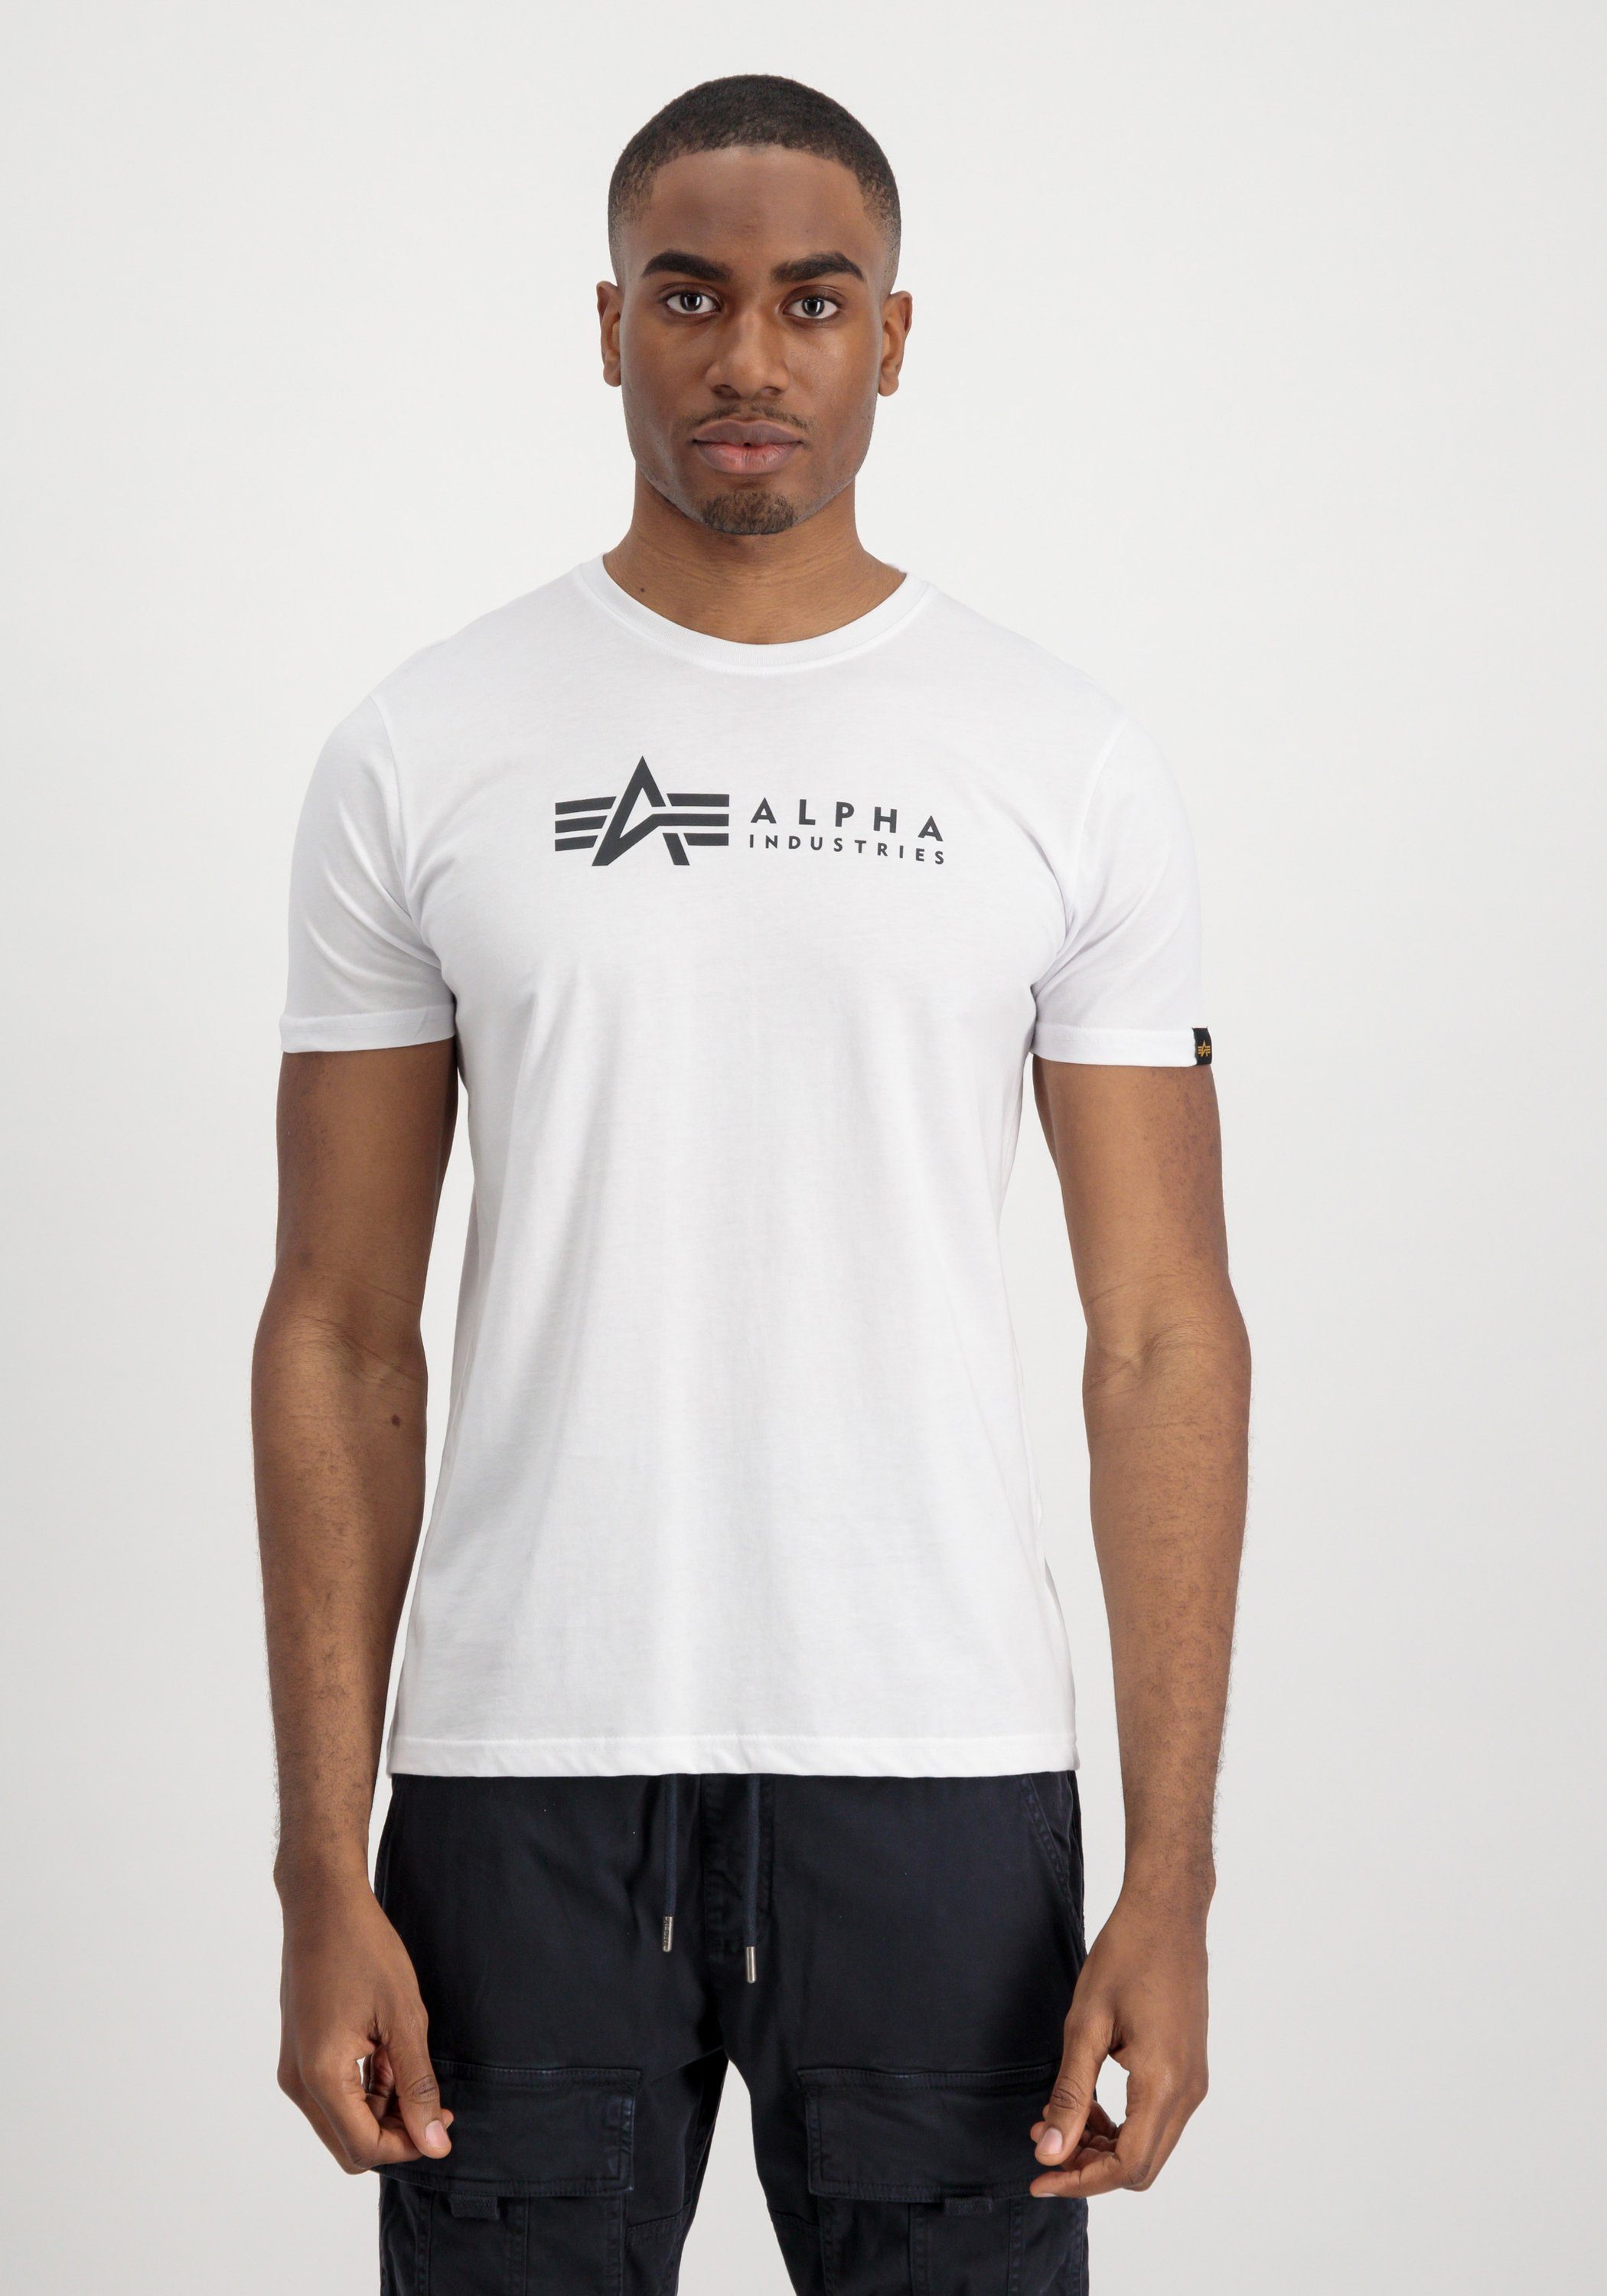 Industries 2 Alpha - Industries Men T-Shirts Pack Alpha T Alpha black/white T-Shirt Label